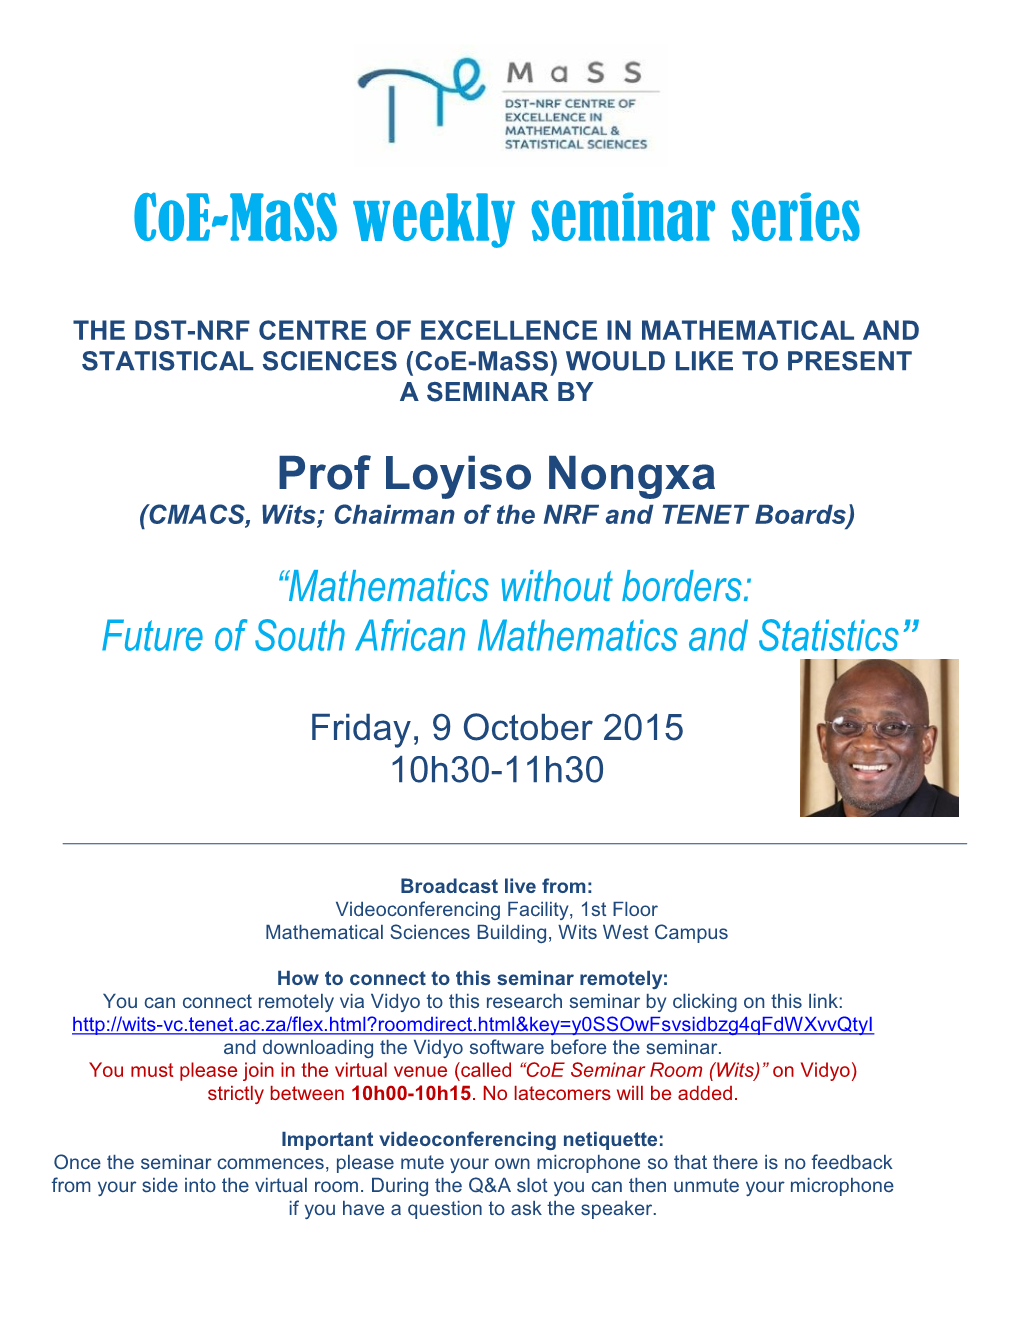 (Coe-Mass) WOULD LIKE to PRESENT a SEMINAR by Prof Loyiso Nongxa